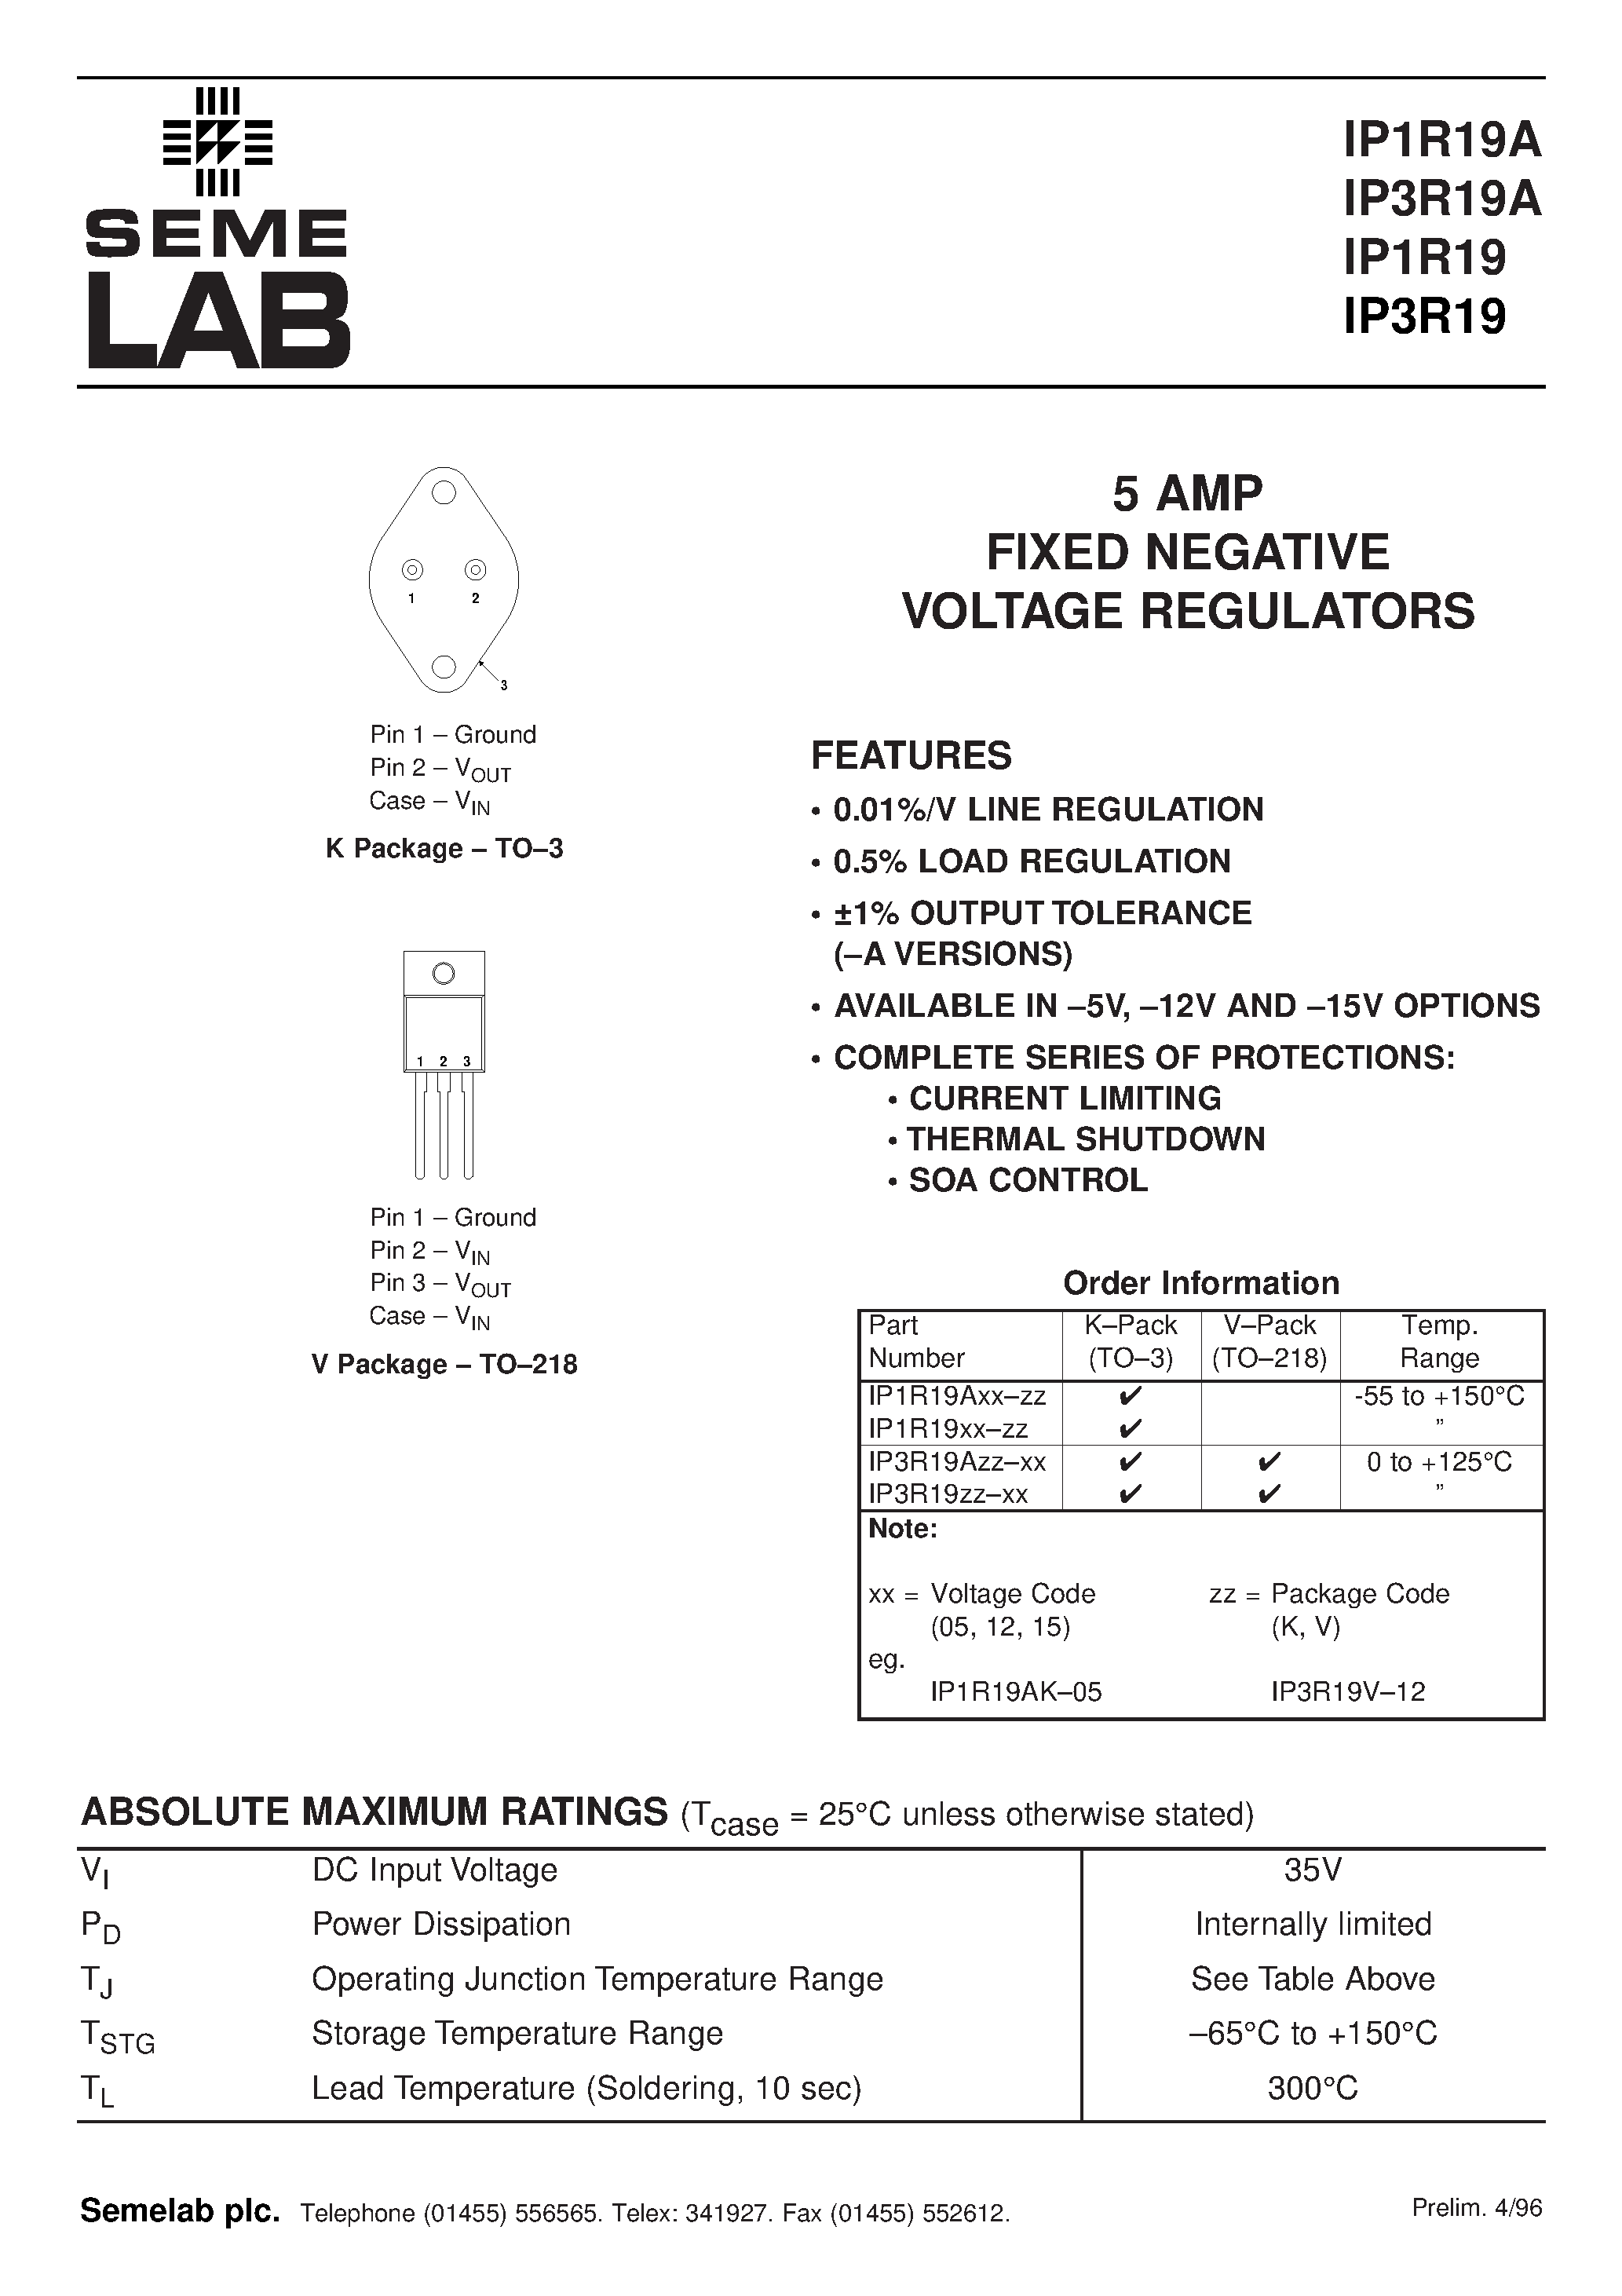 Datasheet IP1R19A15-V - 5 AMP FIXED NEGATIVE VOLTAGE REGULATORS page 1